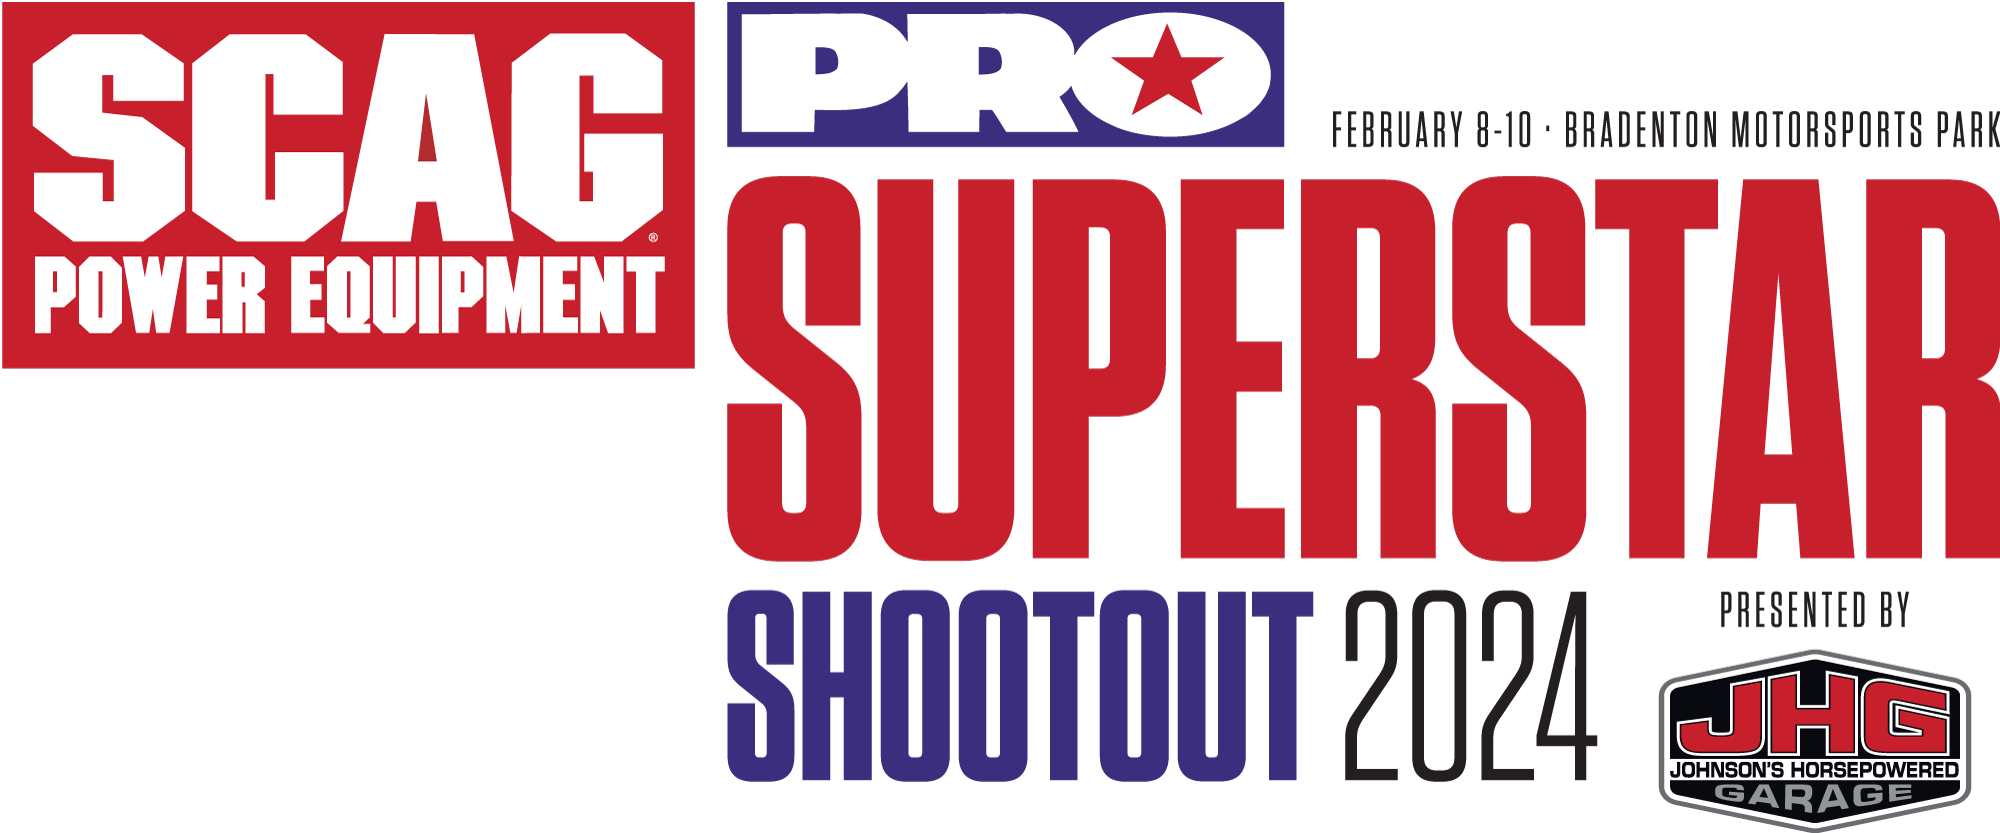 SCAG Power Equipment PRO Superstar Shootout presented by Johnson's Horsepowered Garage